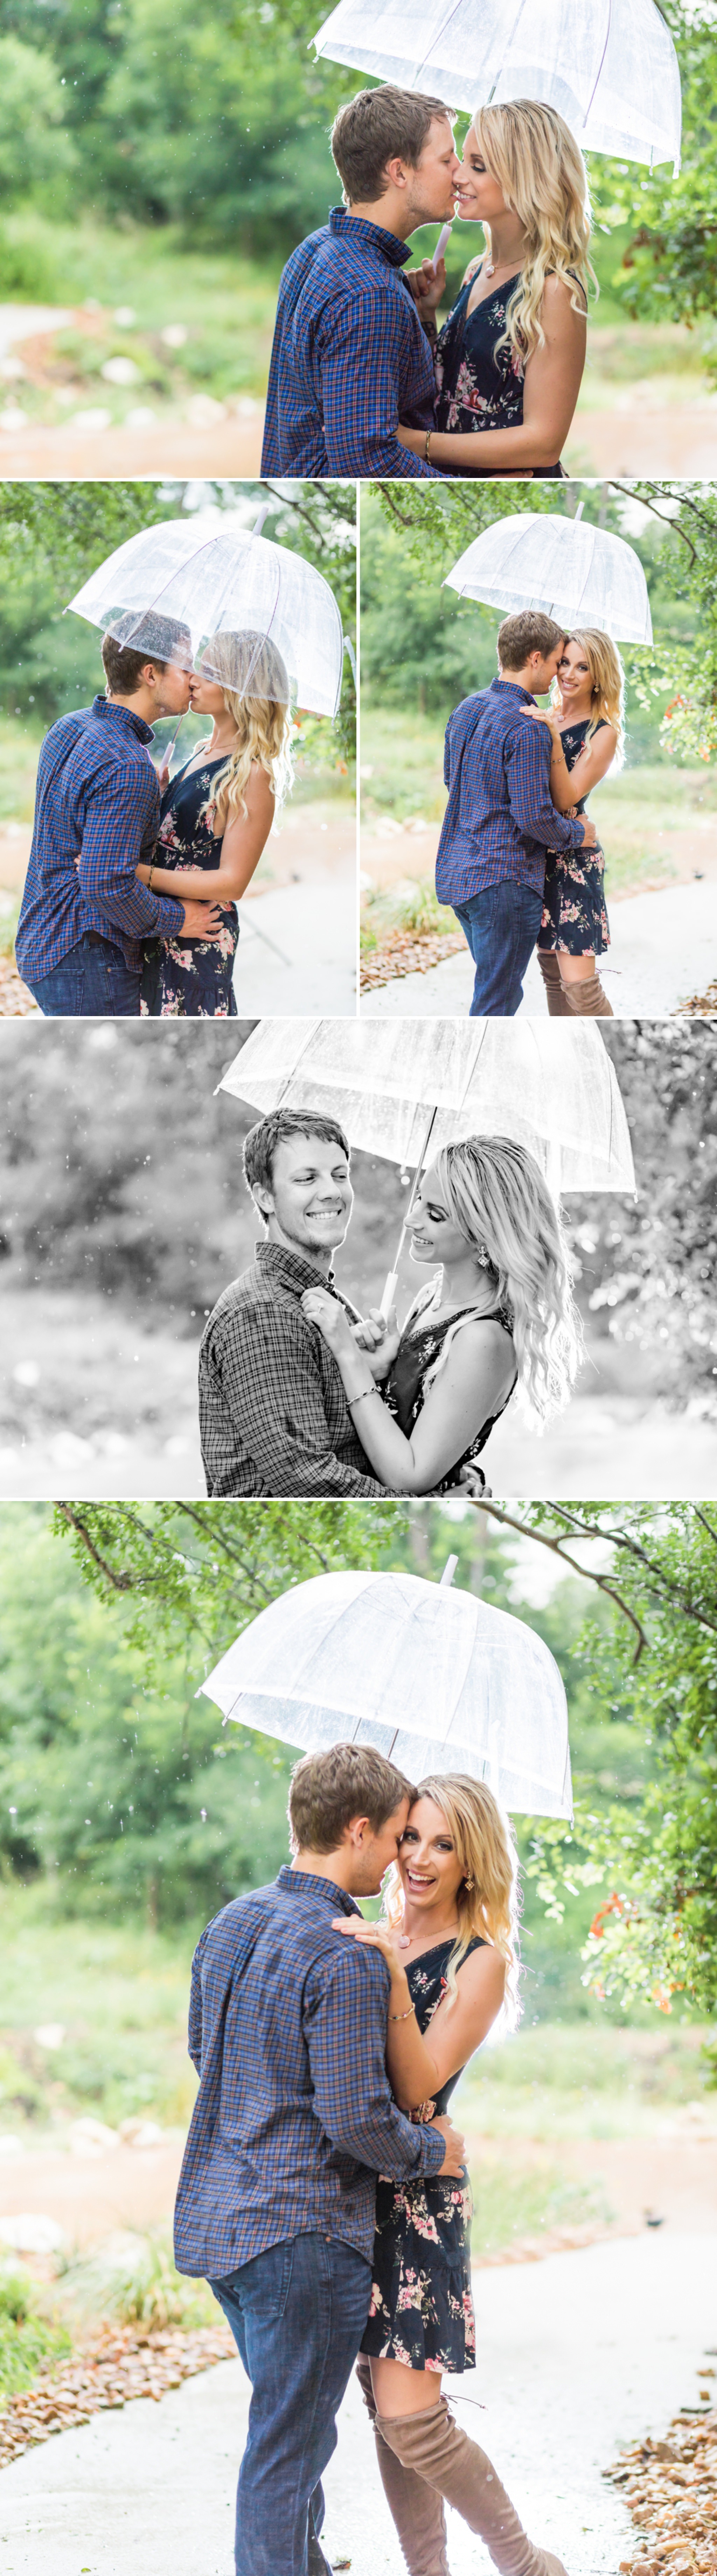 A Rainy Texas Engagement Session at Geronimo Oaks in Seguin, TX | Seguin Wedding Photographer